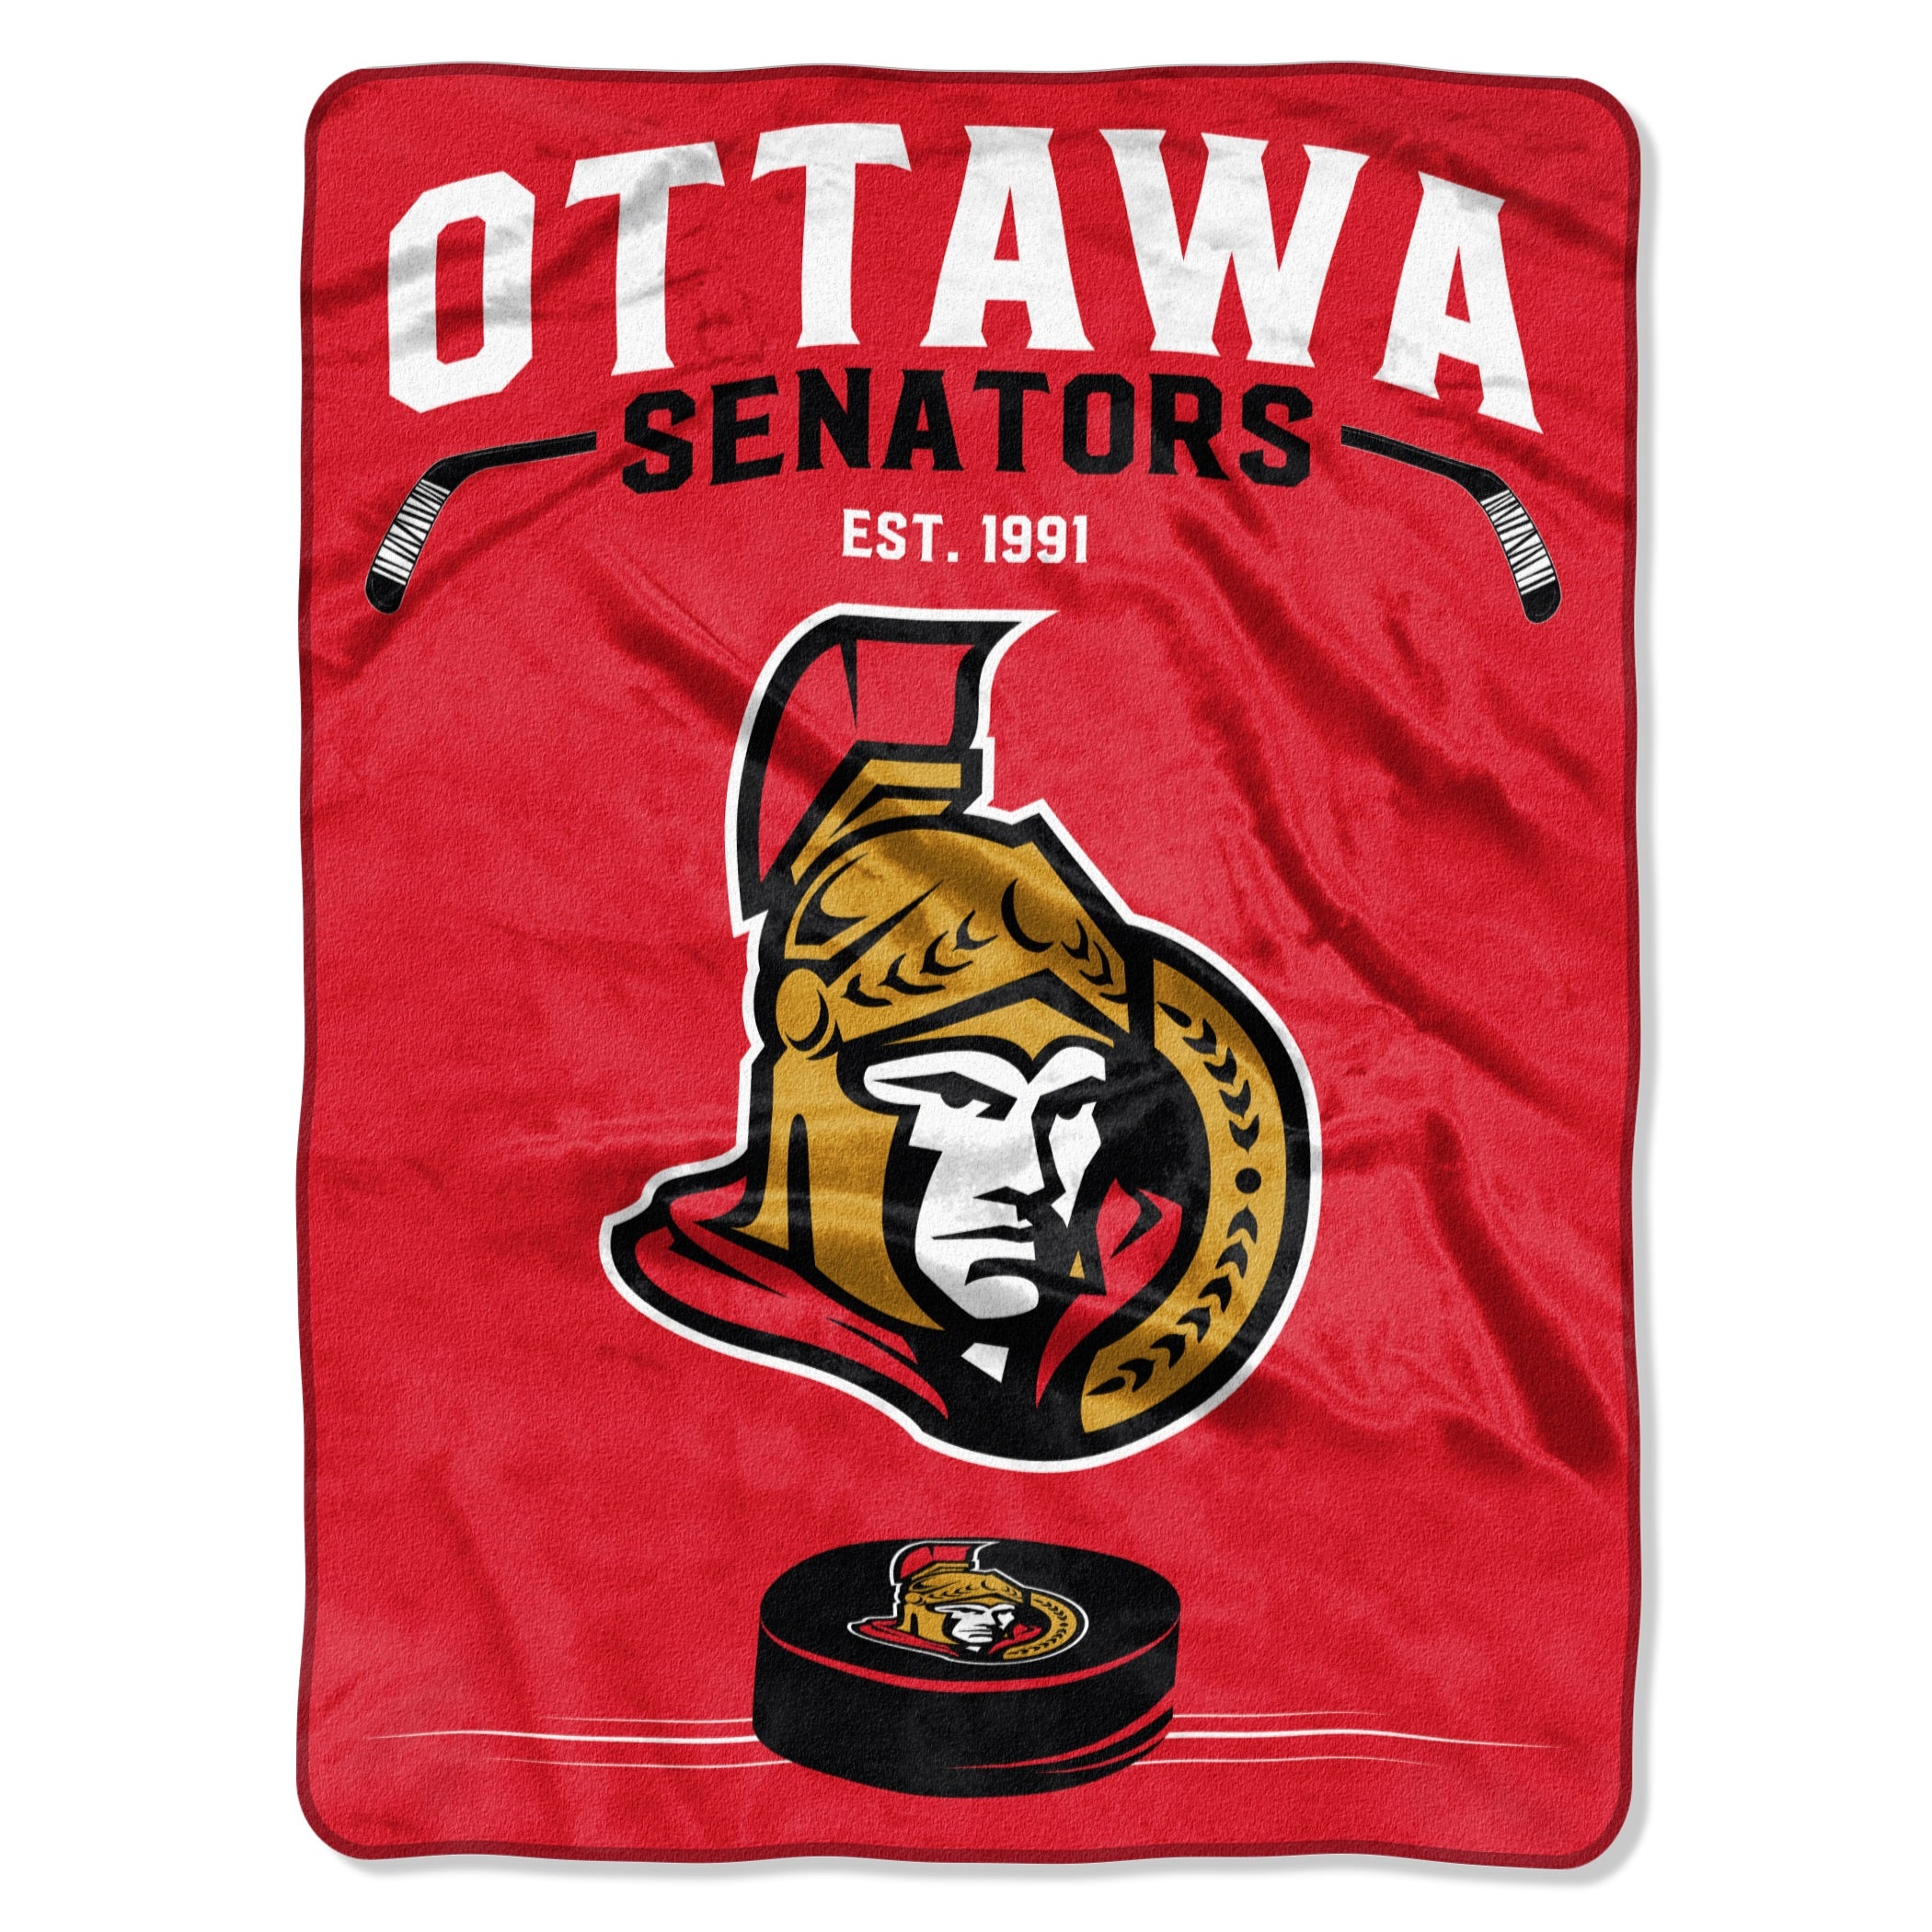 Ottawa Senators Blanket 60x80 Raschel Inspired Design - Special Order